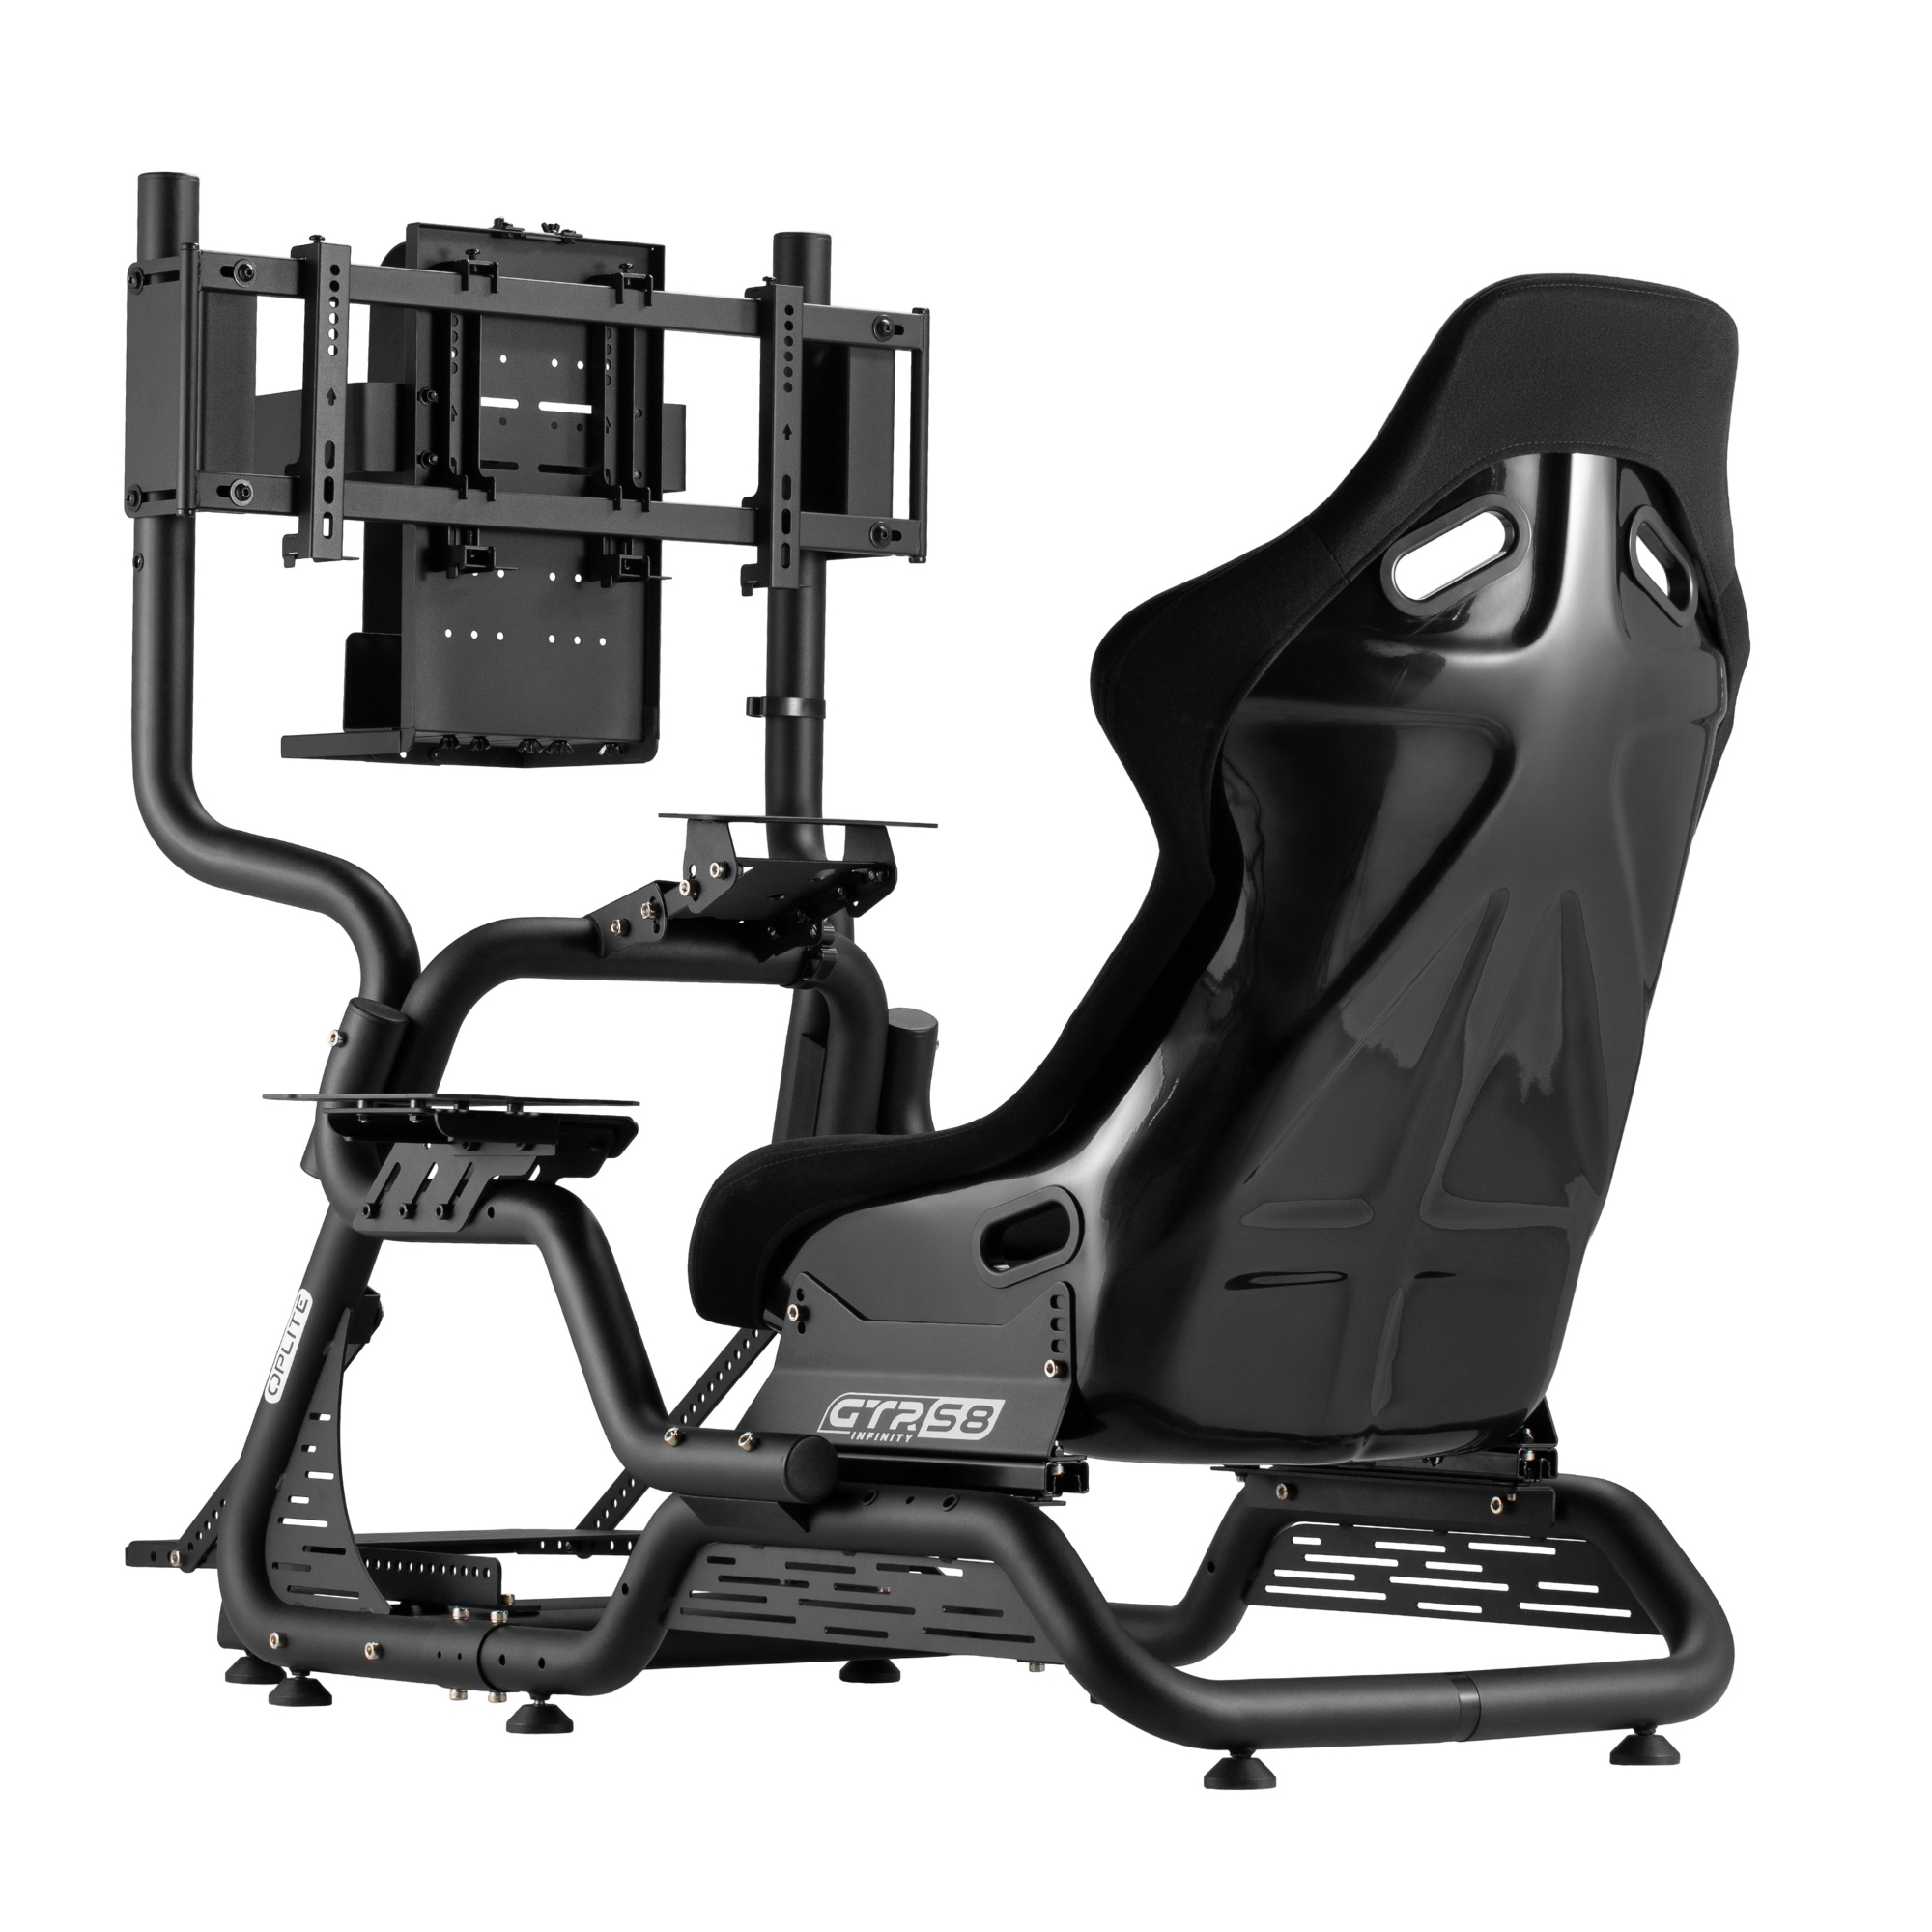 OPLITE Cockpit GTR - Playseat Racing Simulator Cockpit